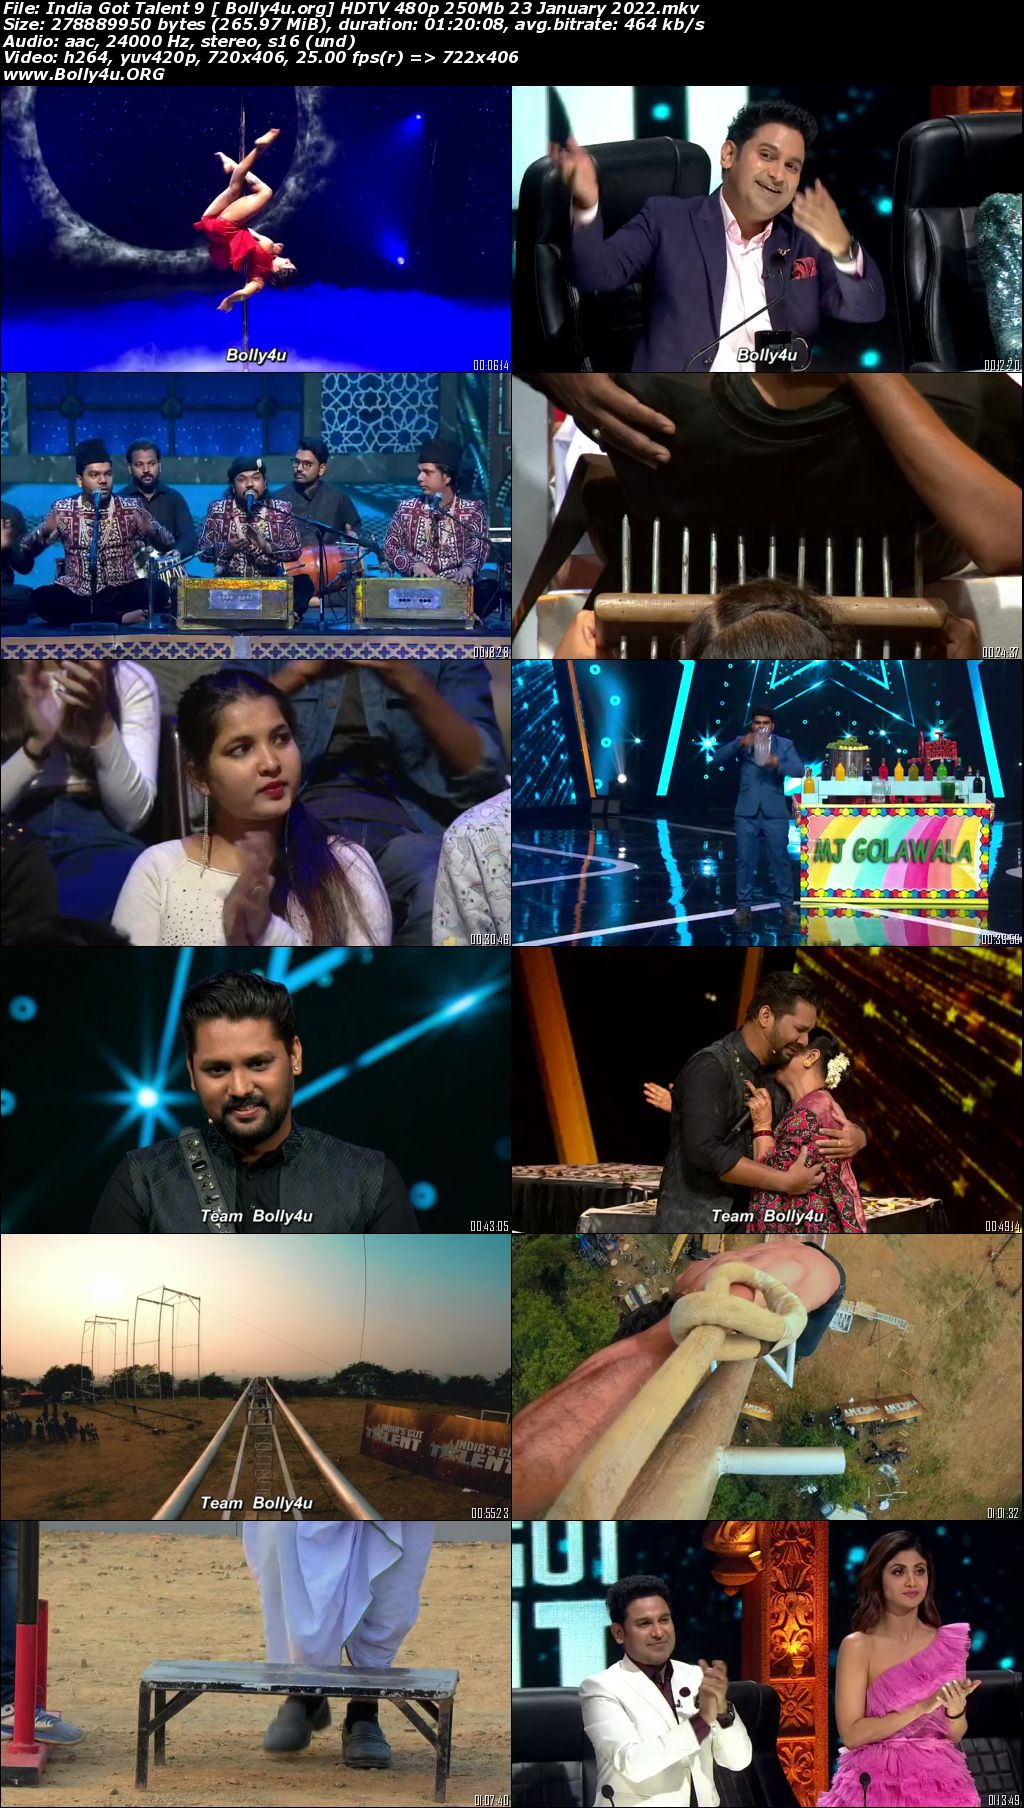 India Got Talent 9 HDTV 480p 250Mb 23 January 2022 Download